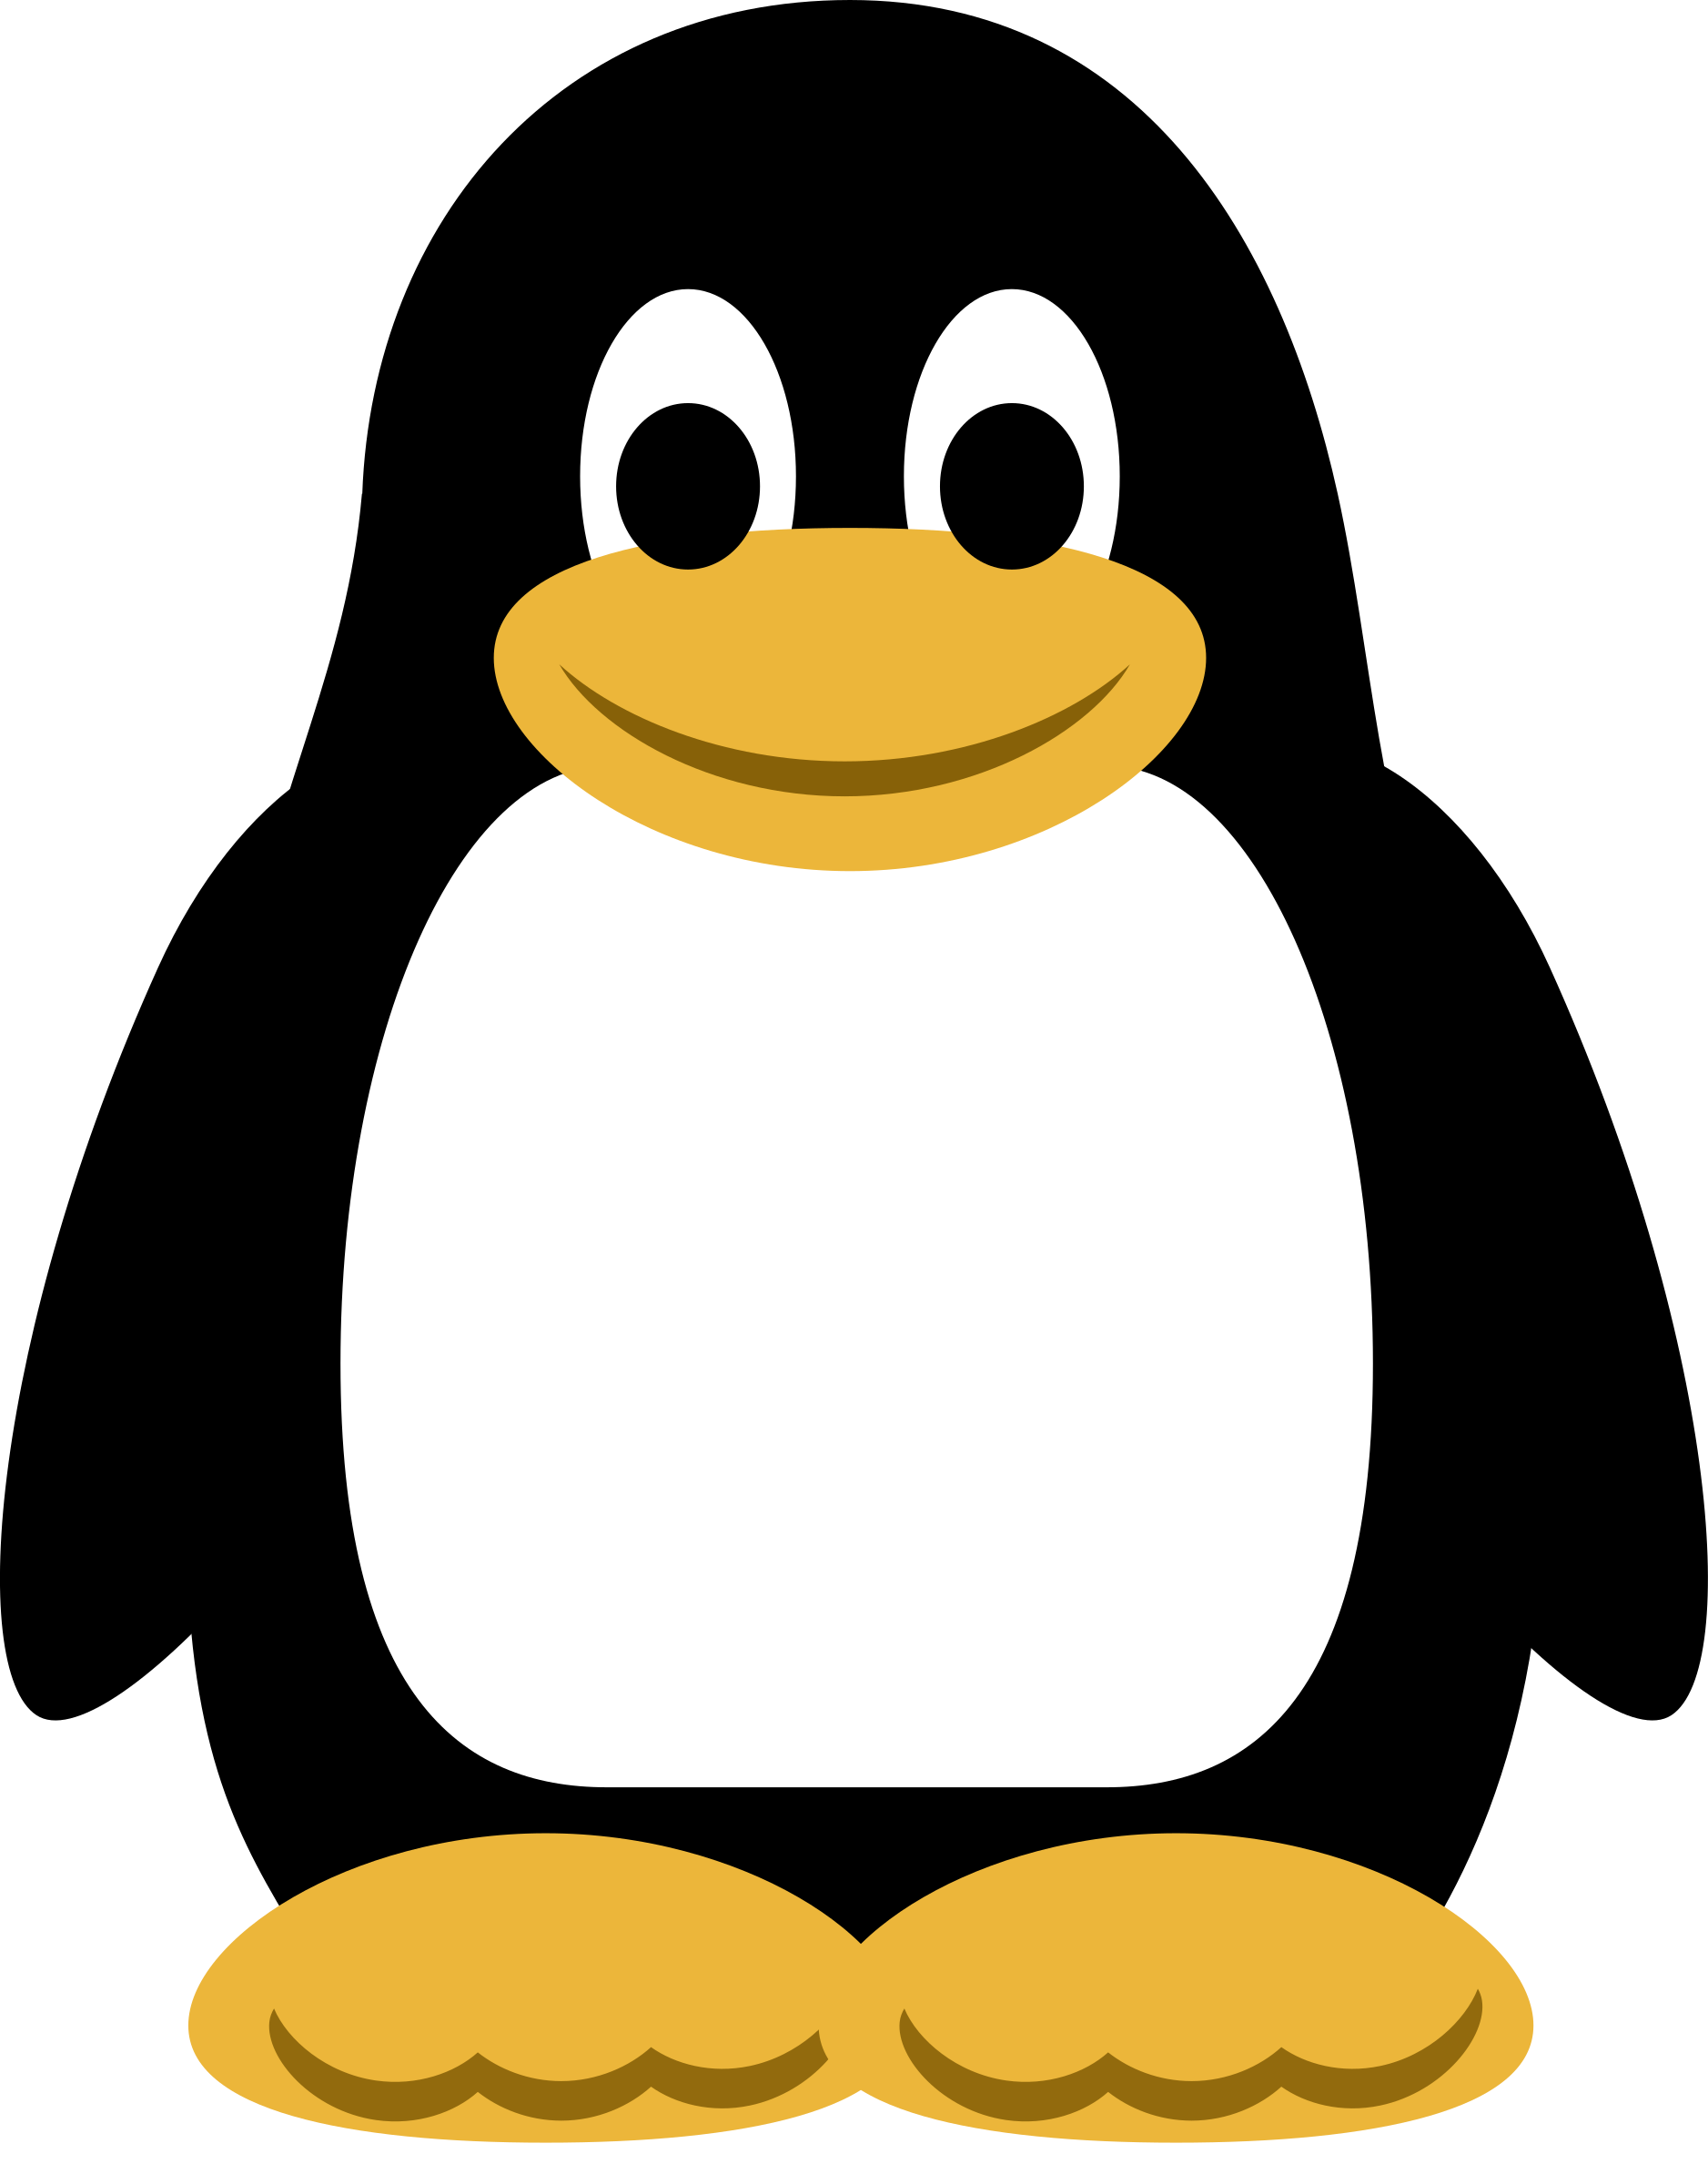 Big Image (Png) - Penguin, Transparent background PNG HD thumbnail